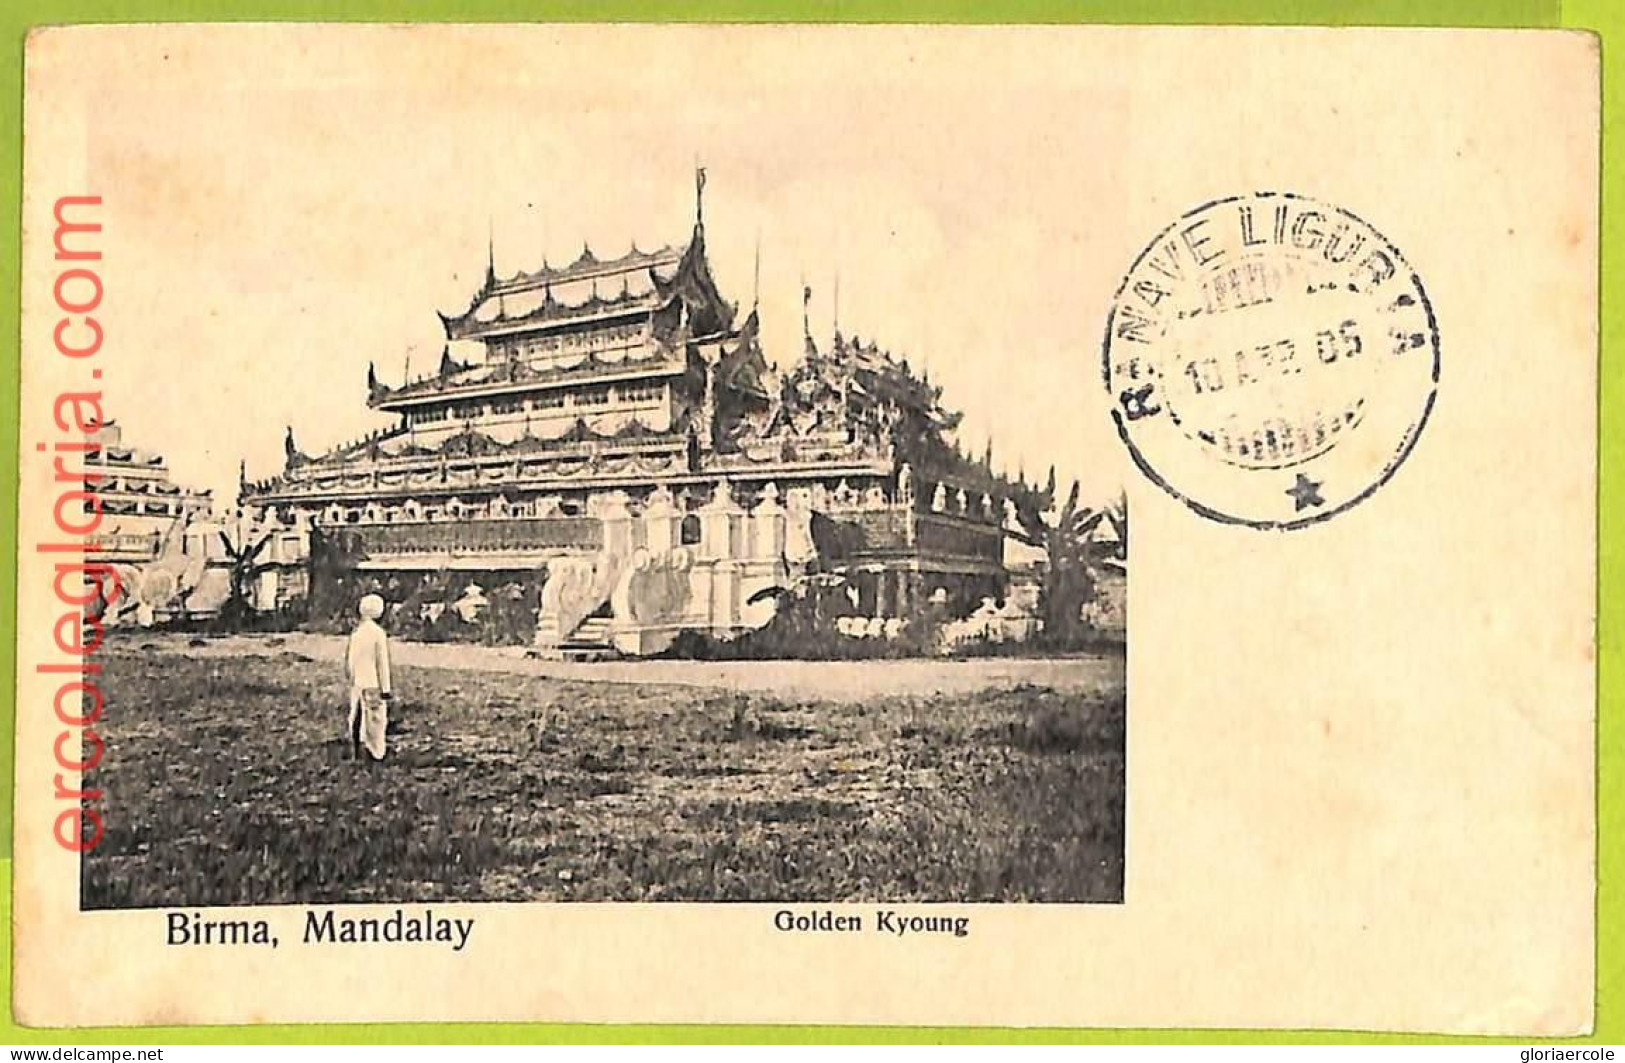 Af3906 - BURMA -  VINTAGE POSTCARD - Mandalay - 1905 - Myanmar (Burma)